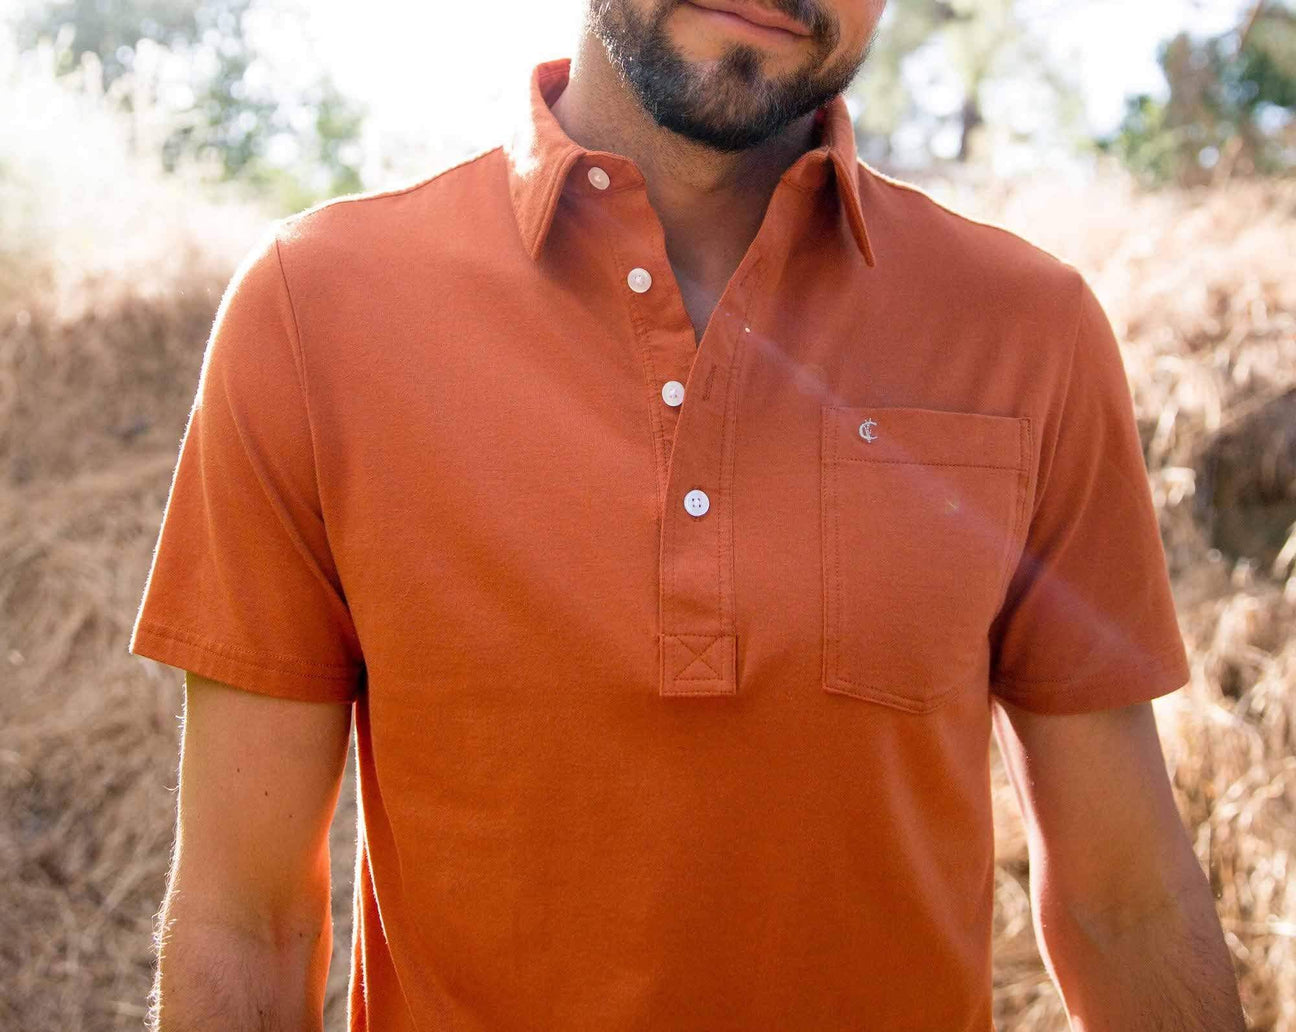 Vineyard Vines Men's Shirts for sale in Austin, Texas